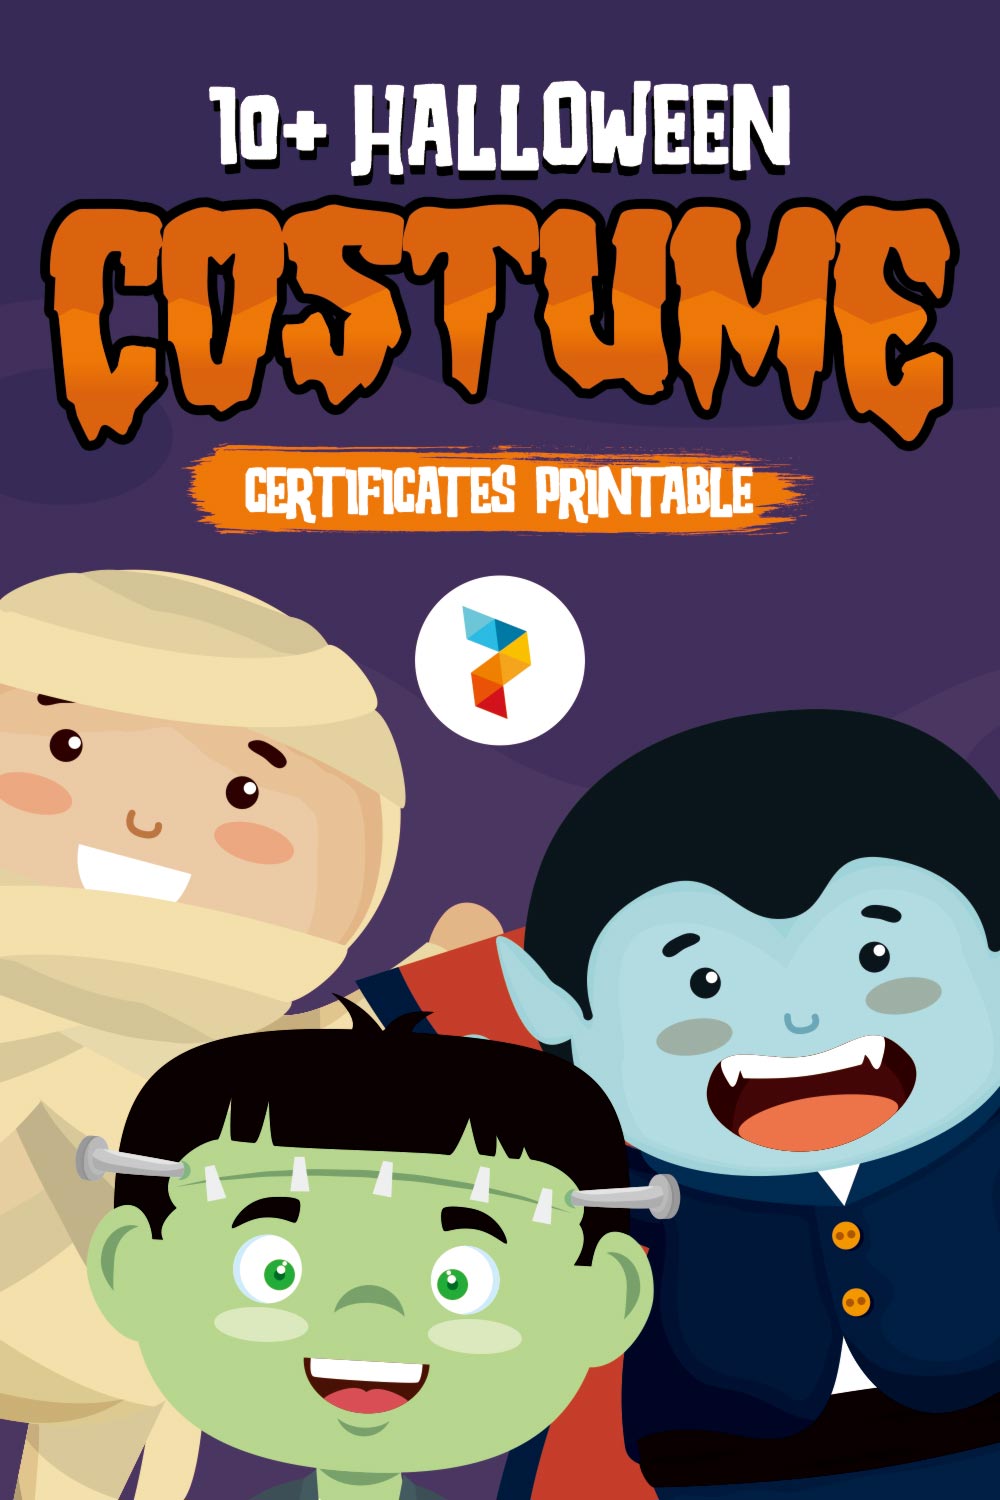 Halloween Costume Certificates Printable